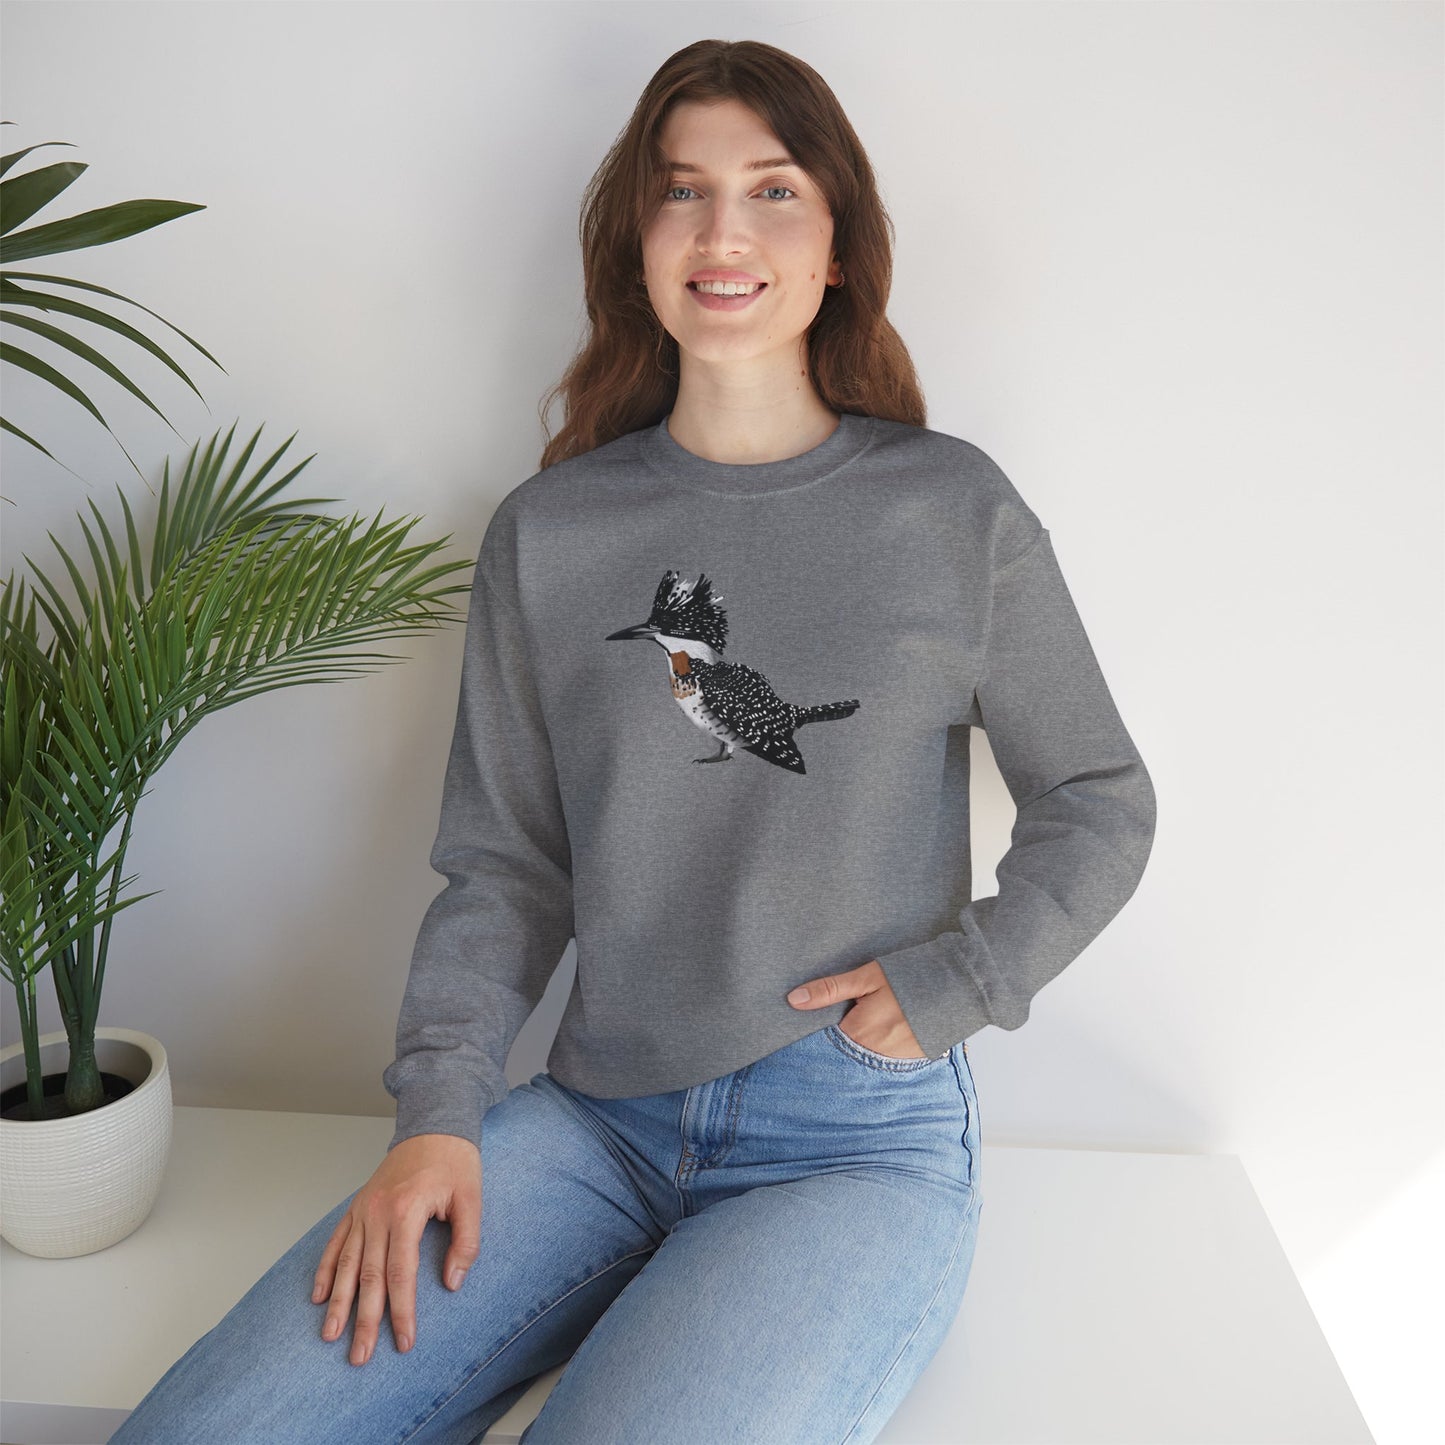 Crested Kingfisher Bird Watcher Biologist Crewneck Sweatshirt